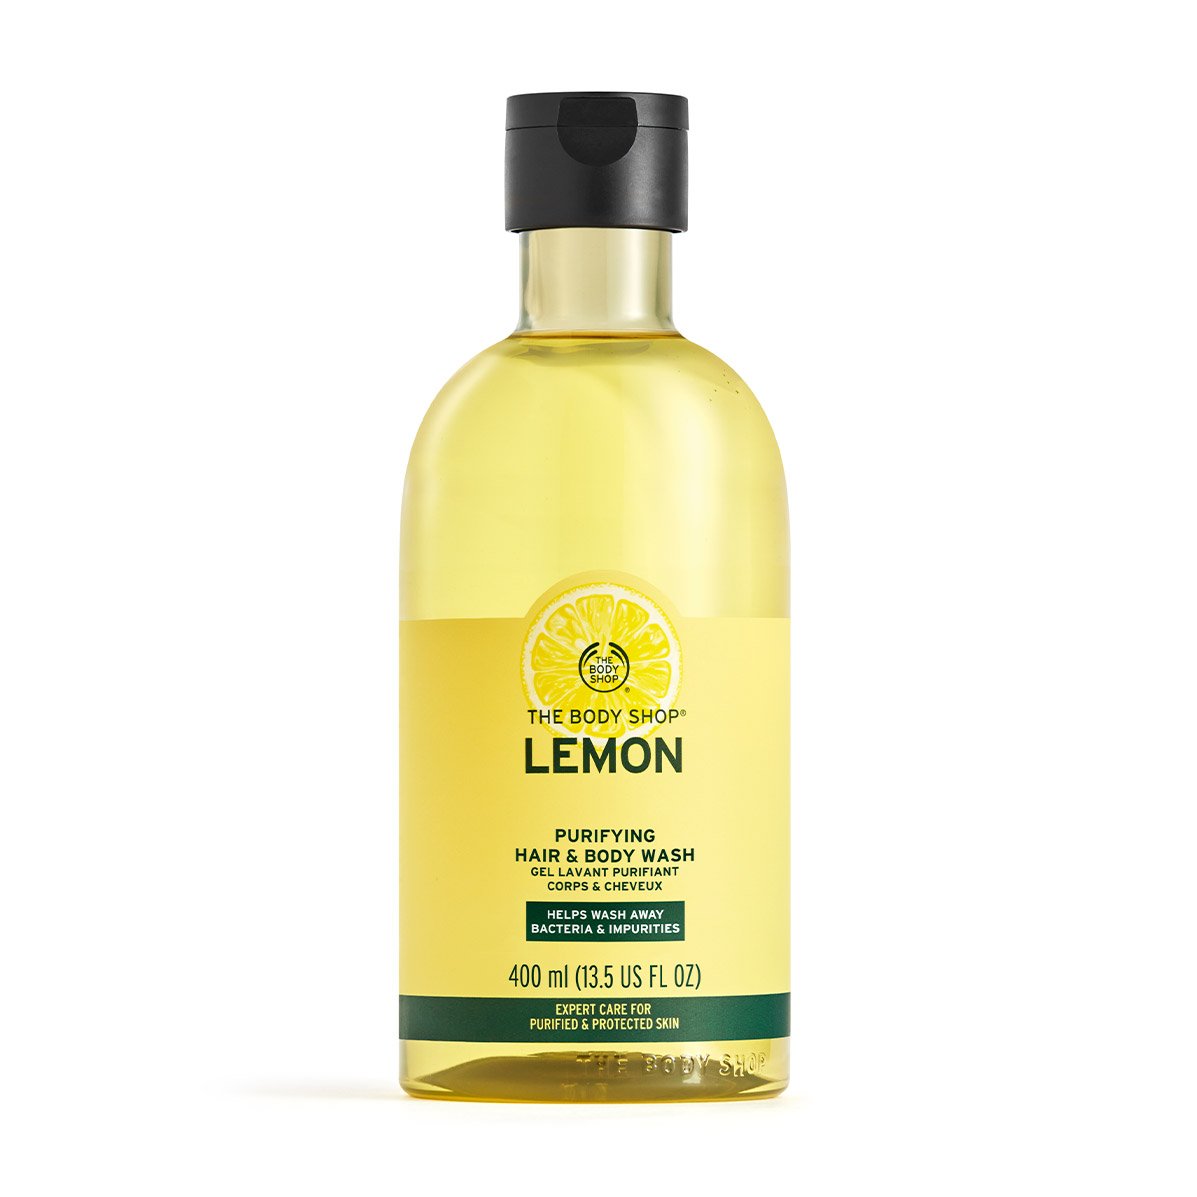 The Body Shop Lemon Hair & Body Wash